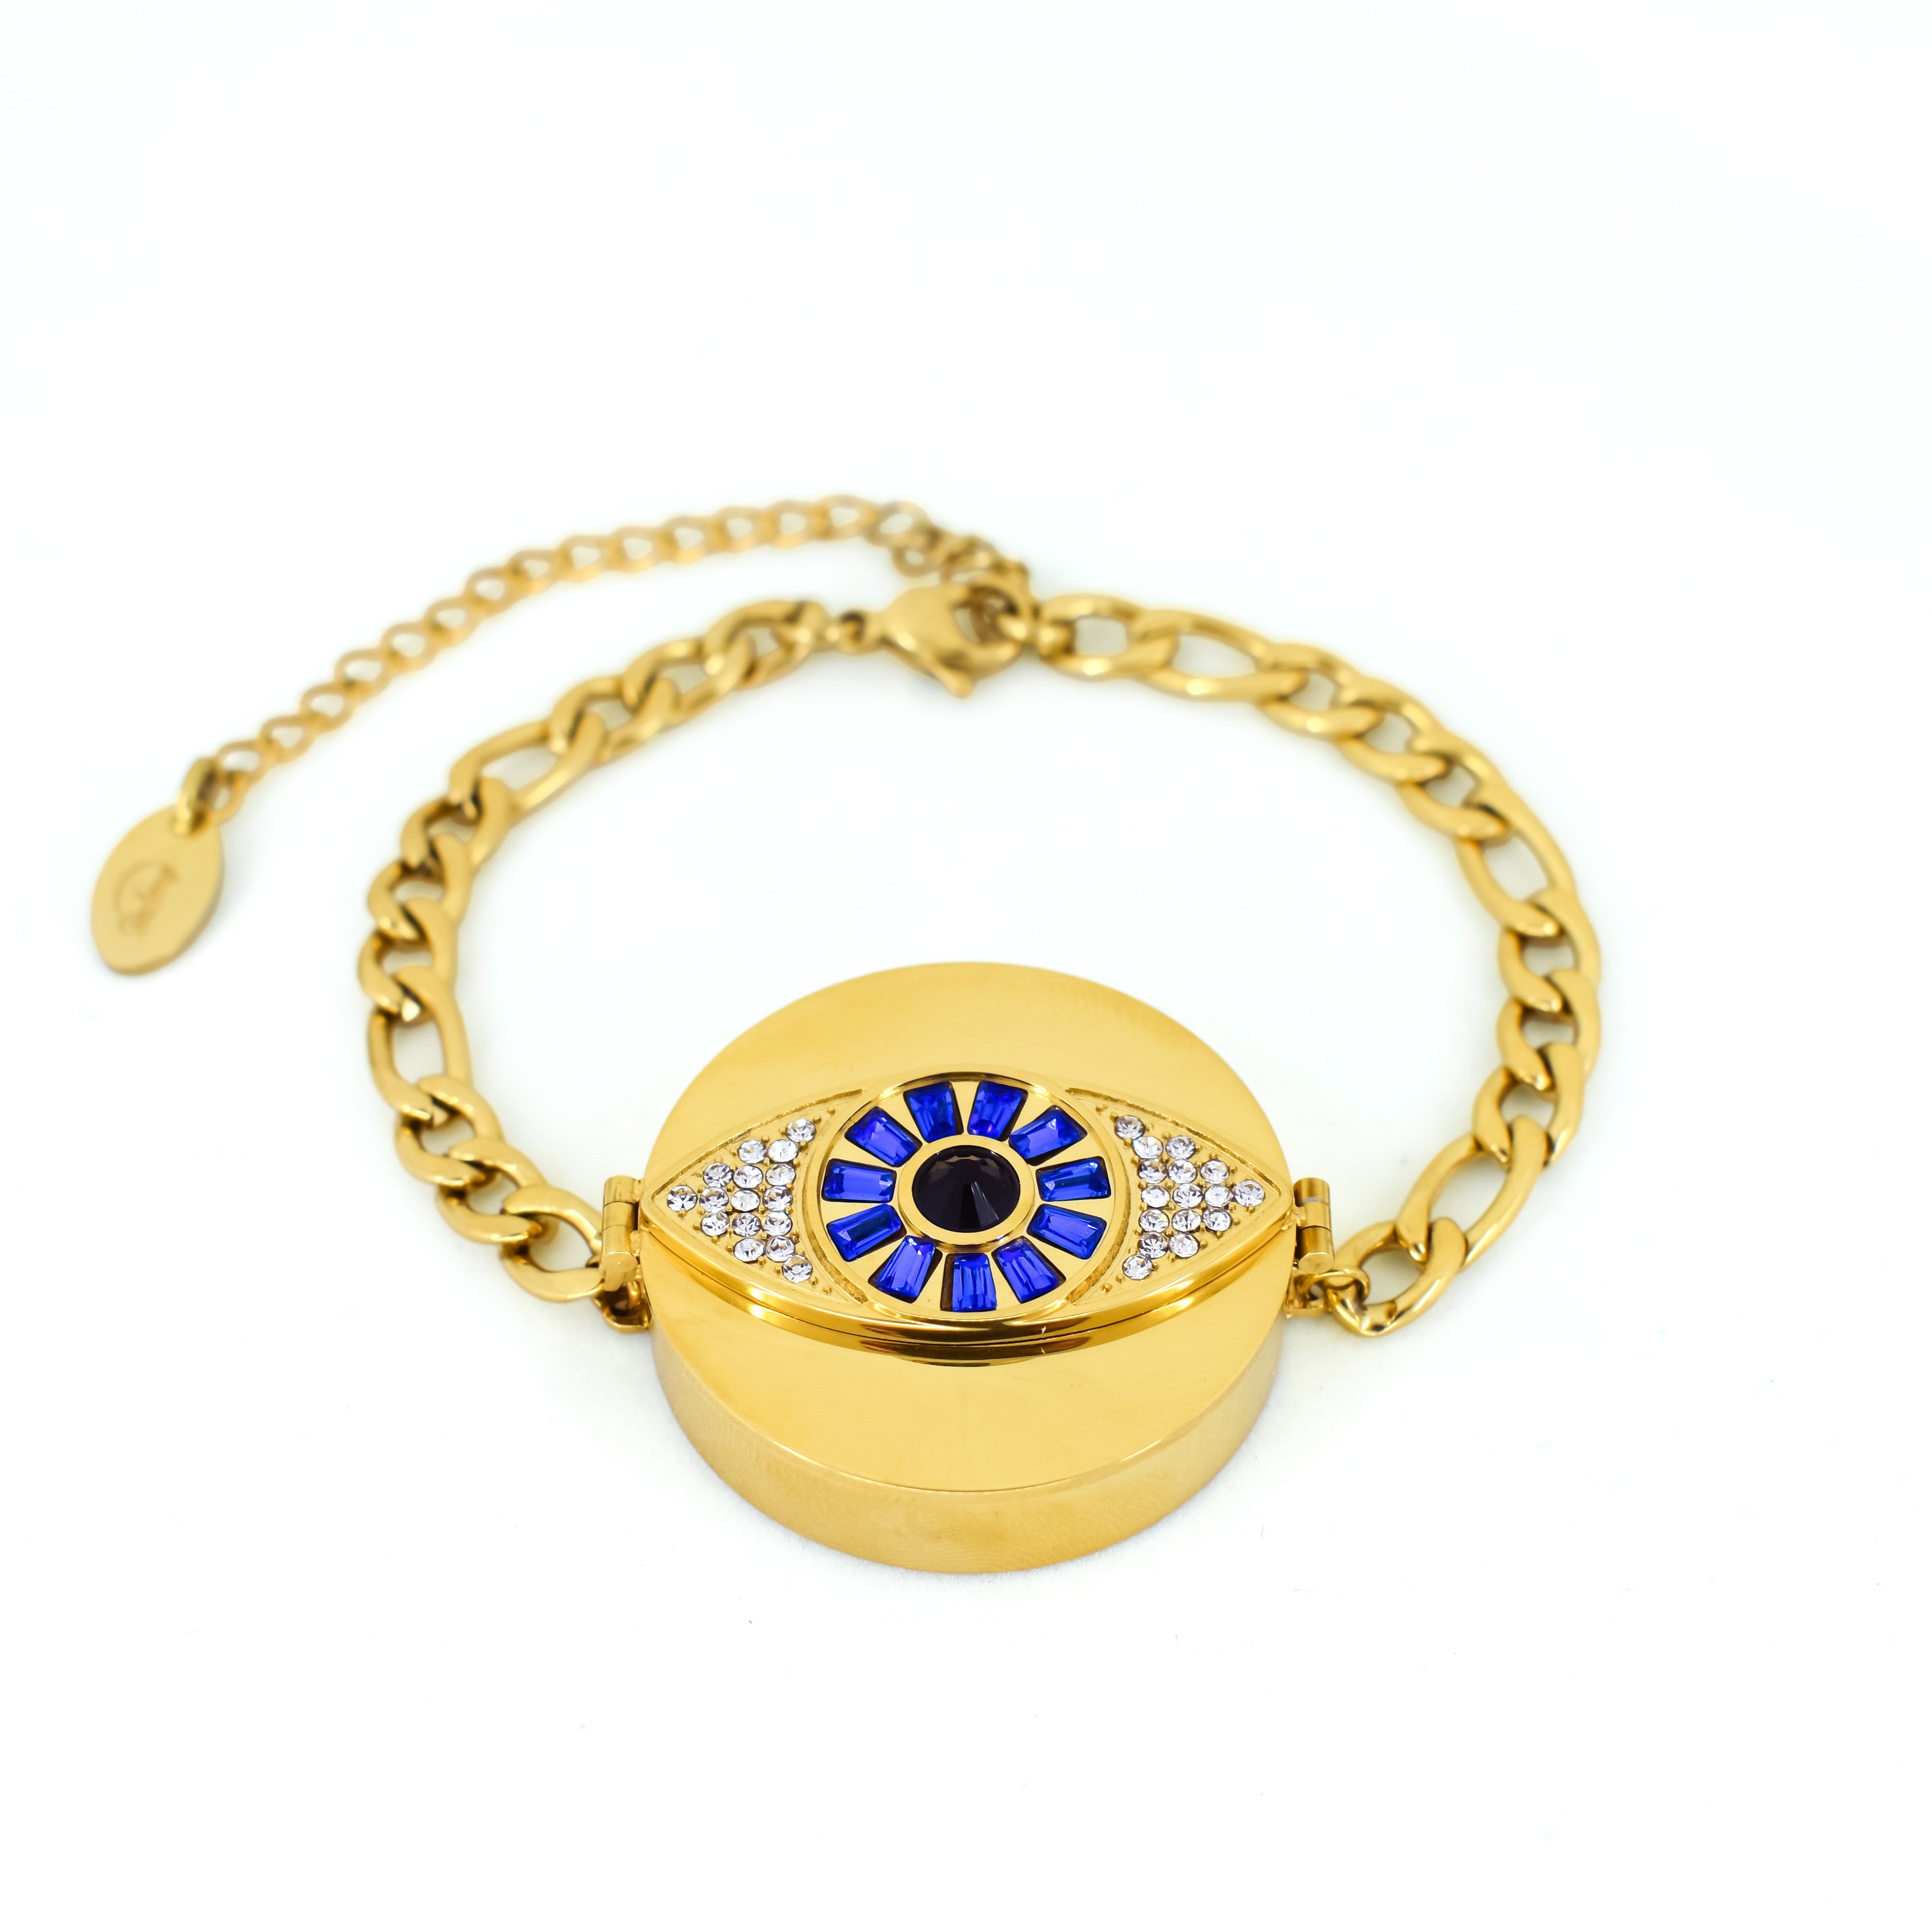 Protective Eye Talisman Lip Balm Bracelet in 14K Gold - getbalmy